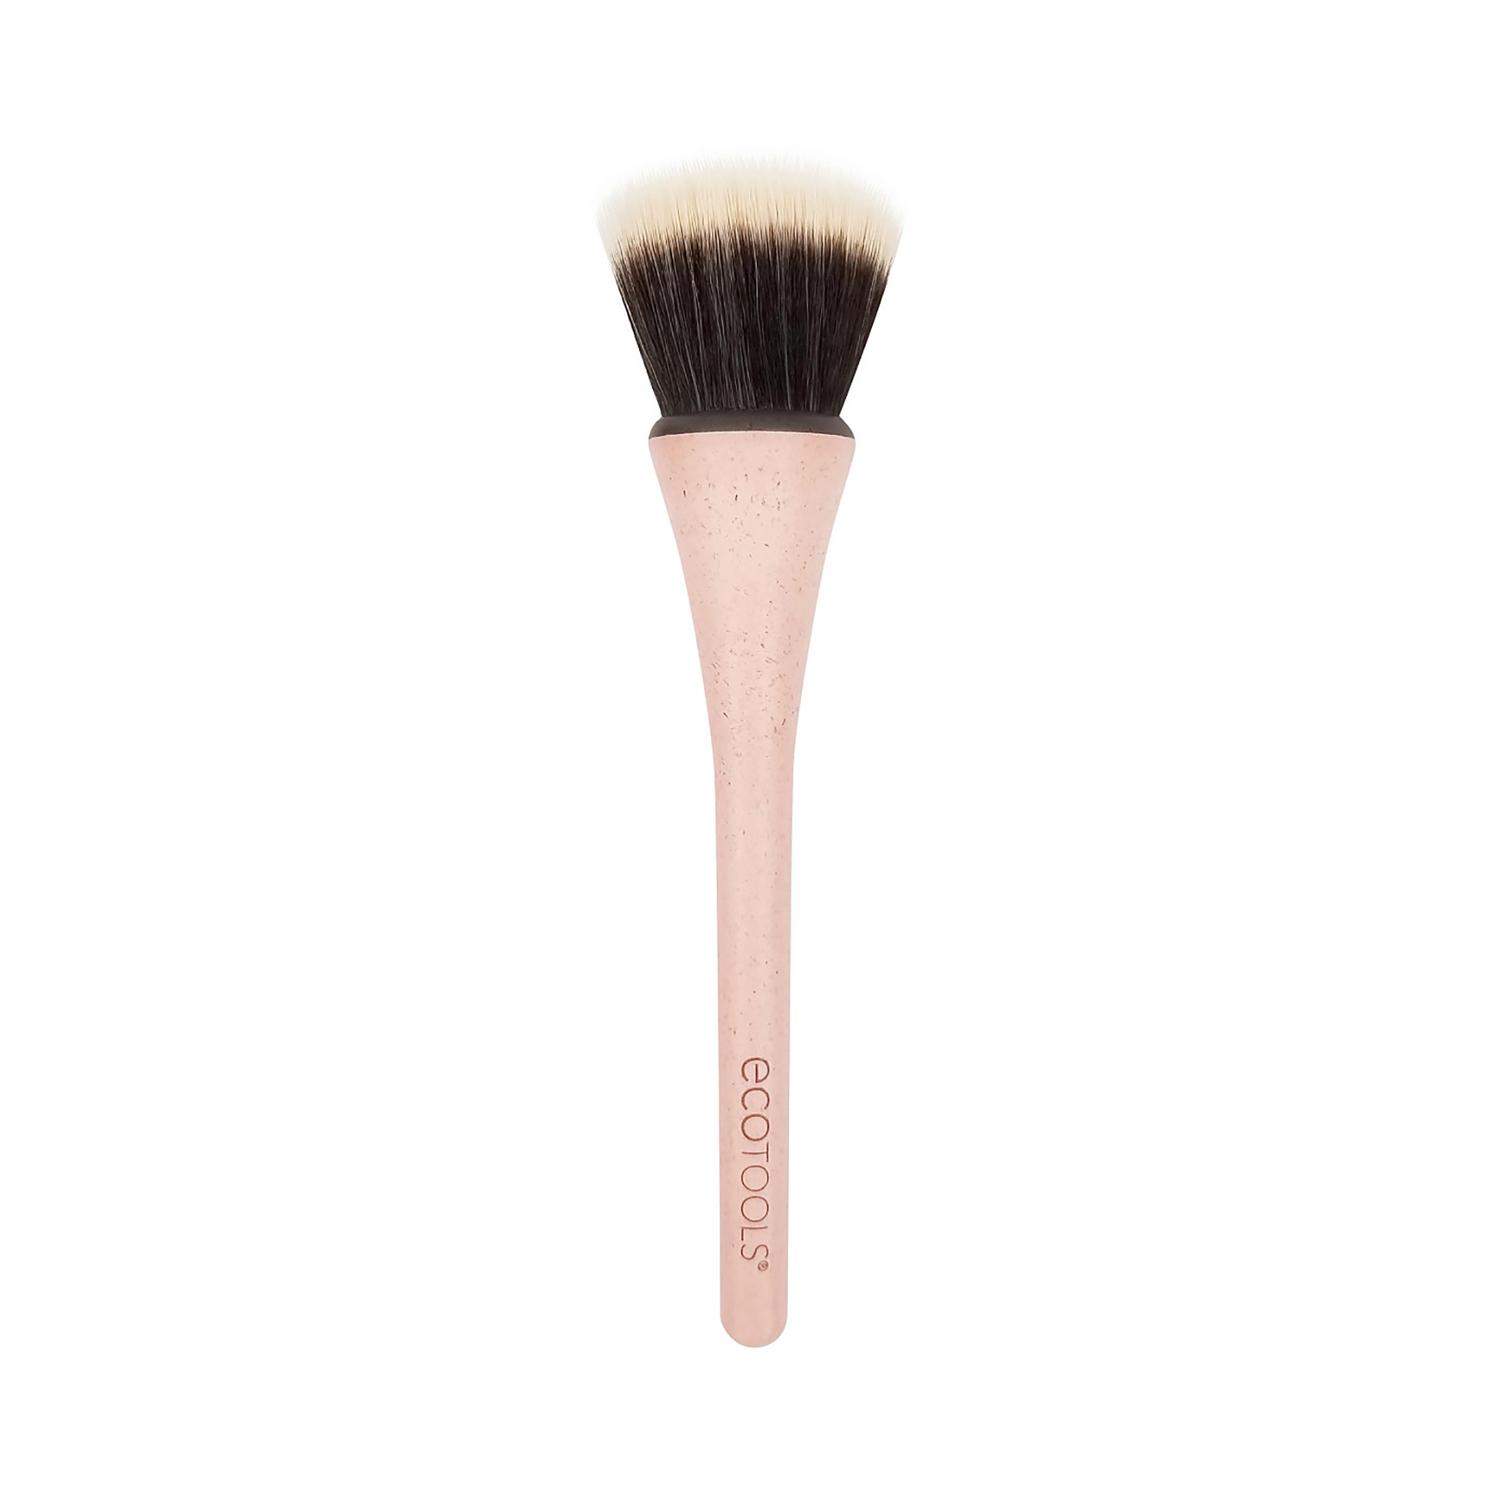 Ecotools | Ecotools 360 Ultimate Sheer Foundation Makeup Brush - Beige (1 pc)